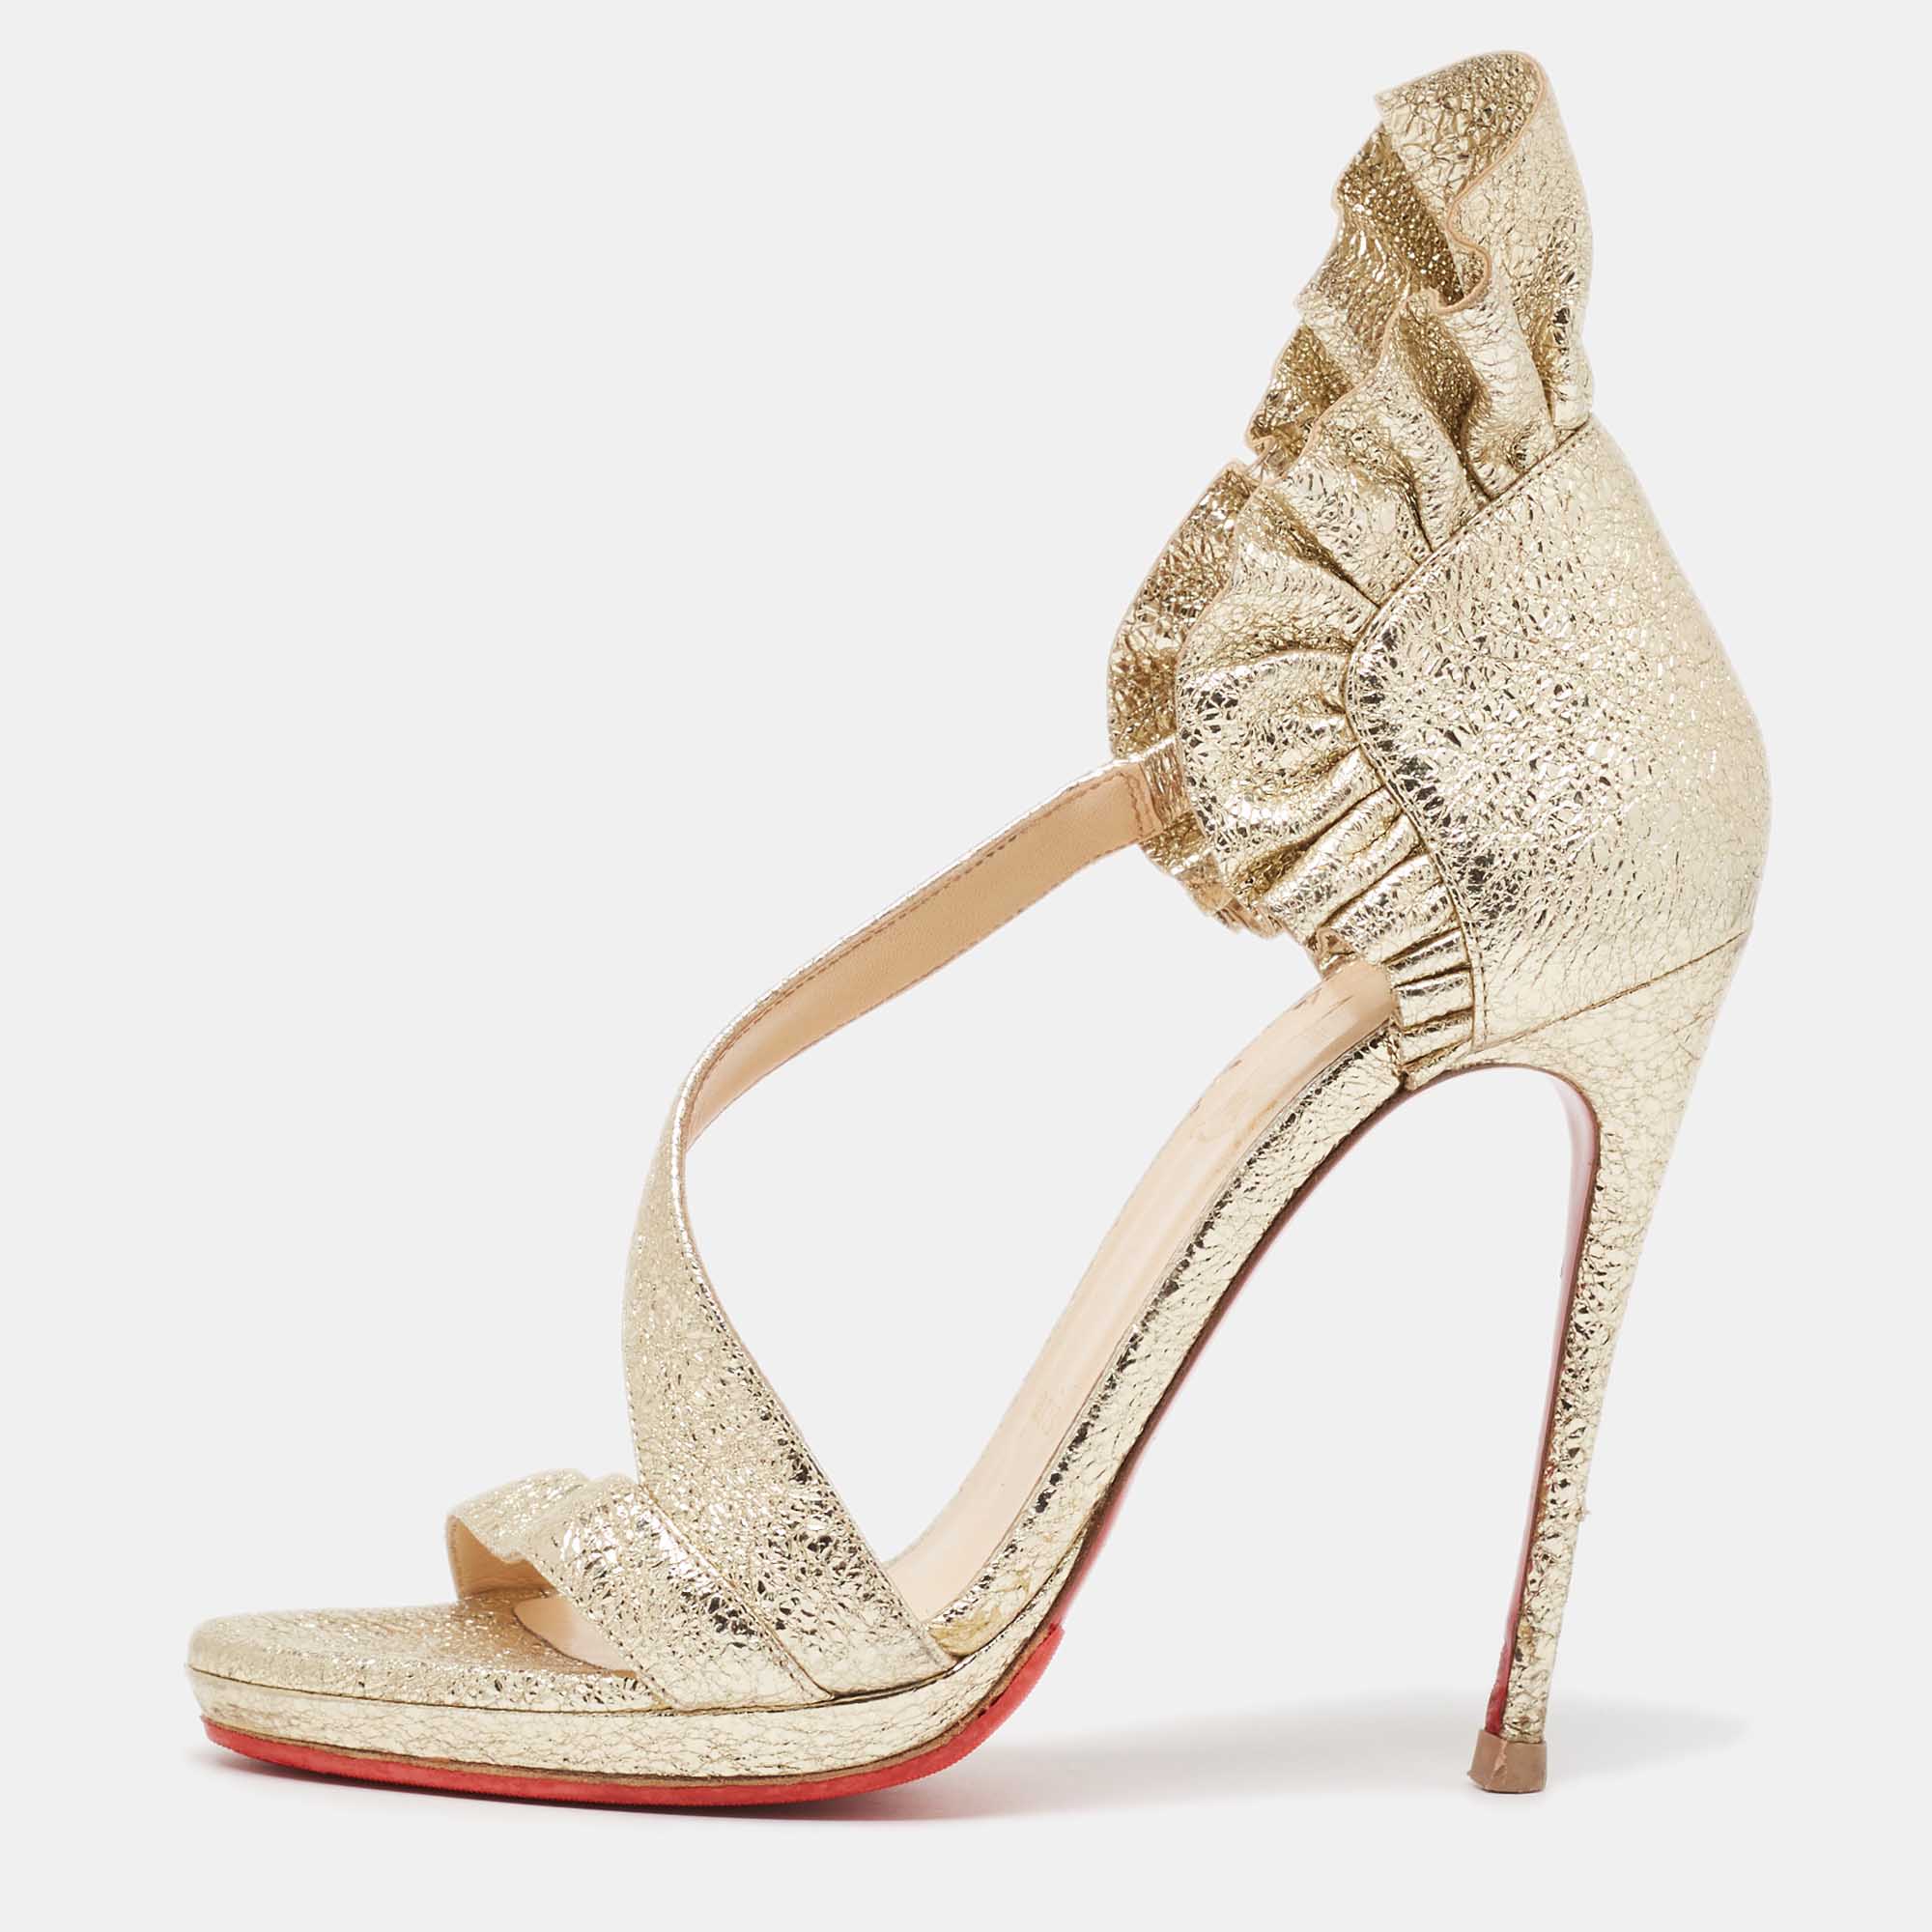 Christian louboutin gold texture leather ruffle embellishment sandals size 37